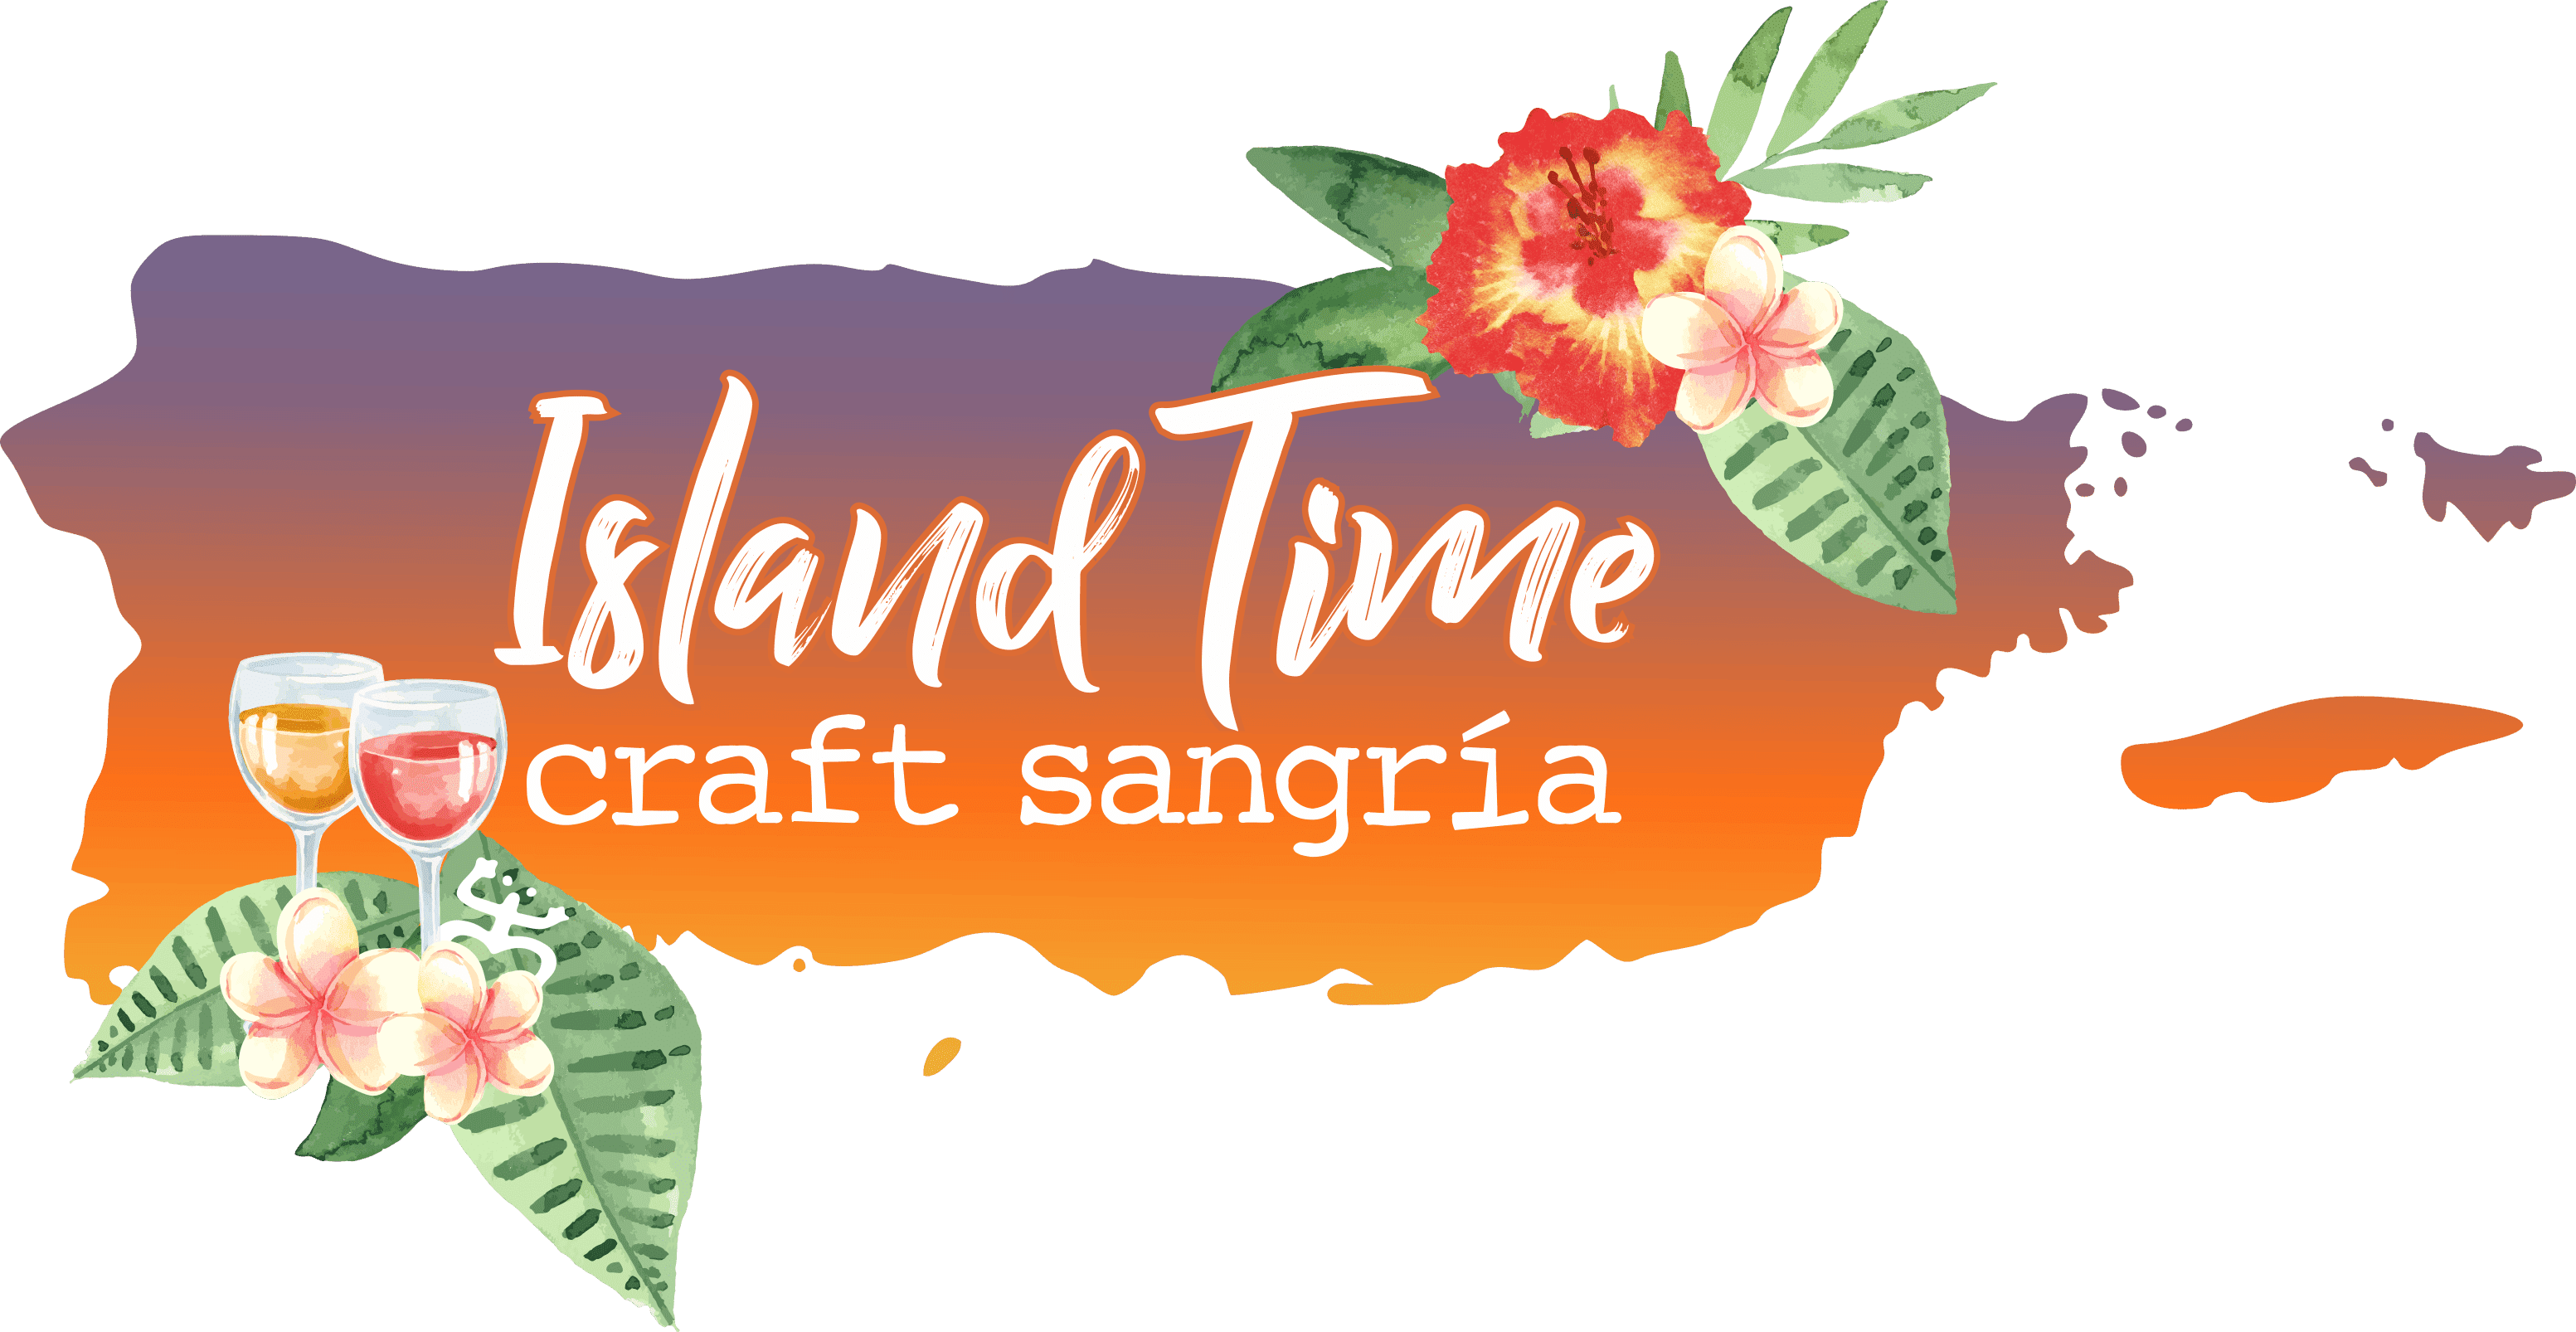 Island Time Cocktails & Creams